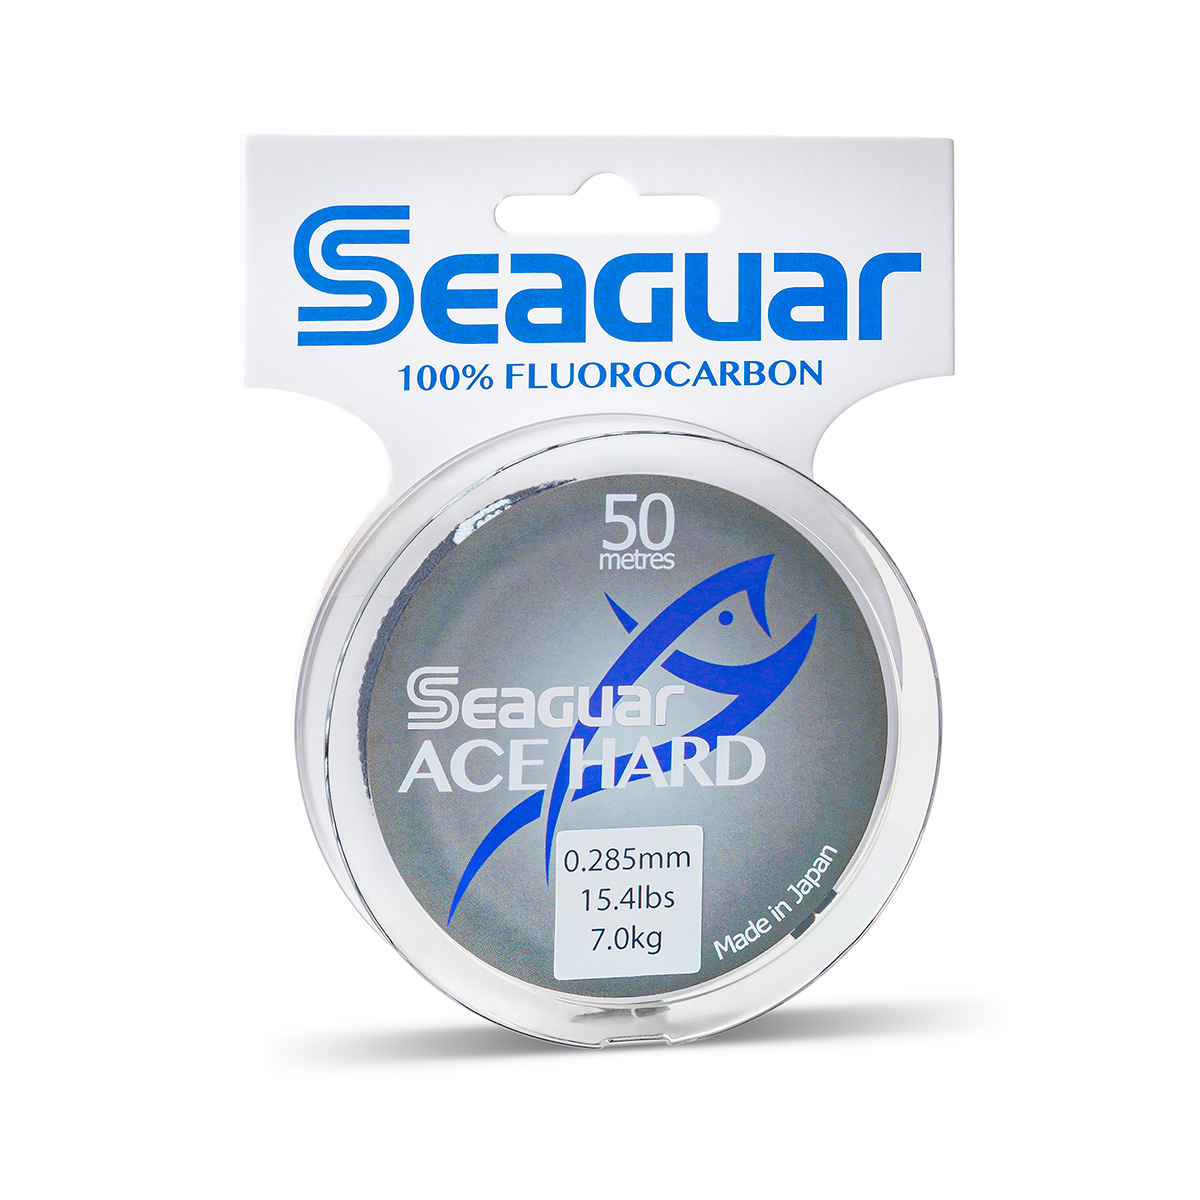 Seaguar Ace Hard Fluorocarbon Line Spools